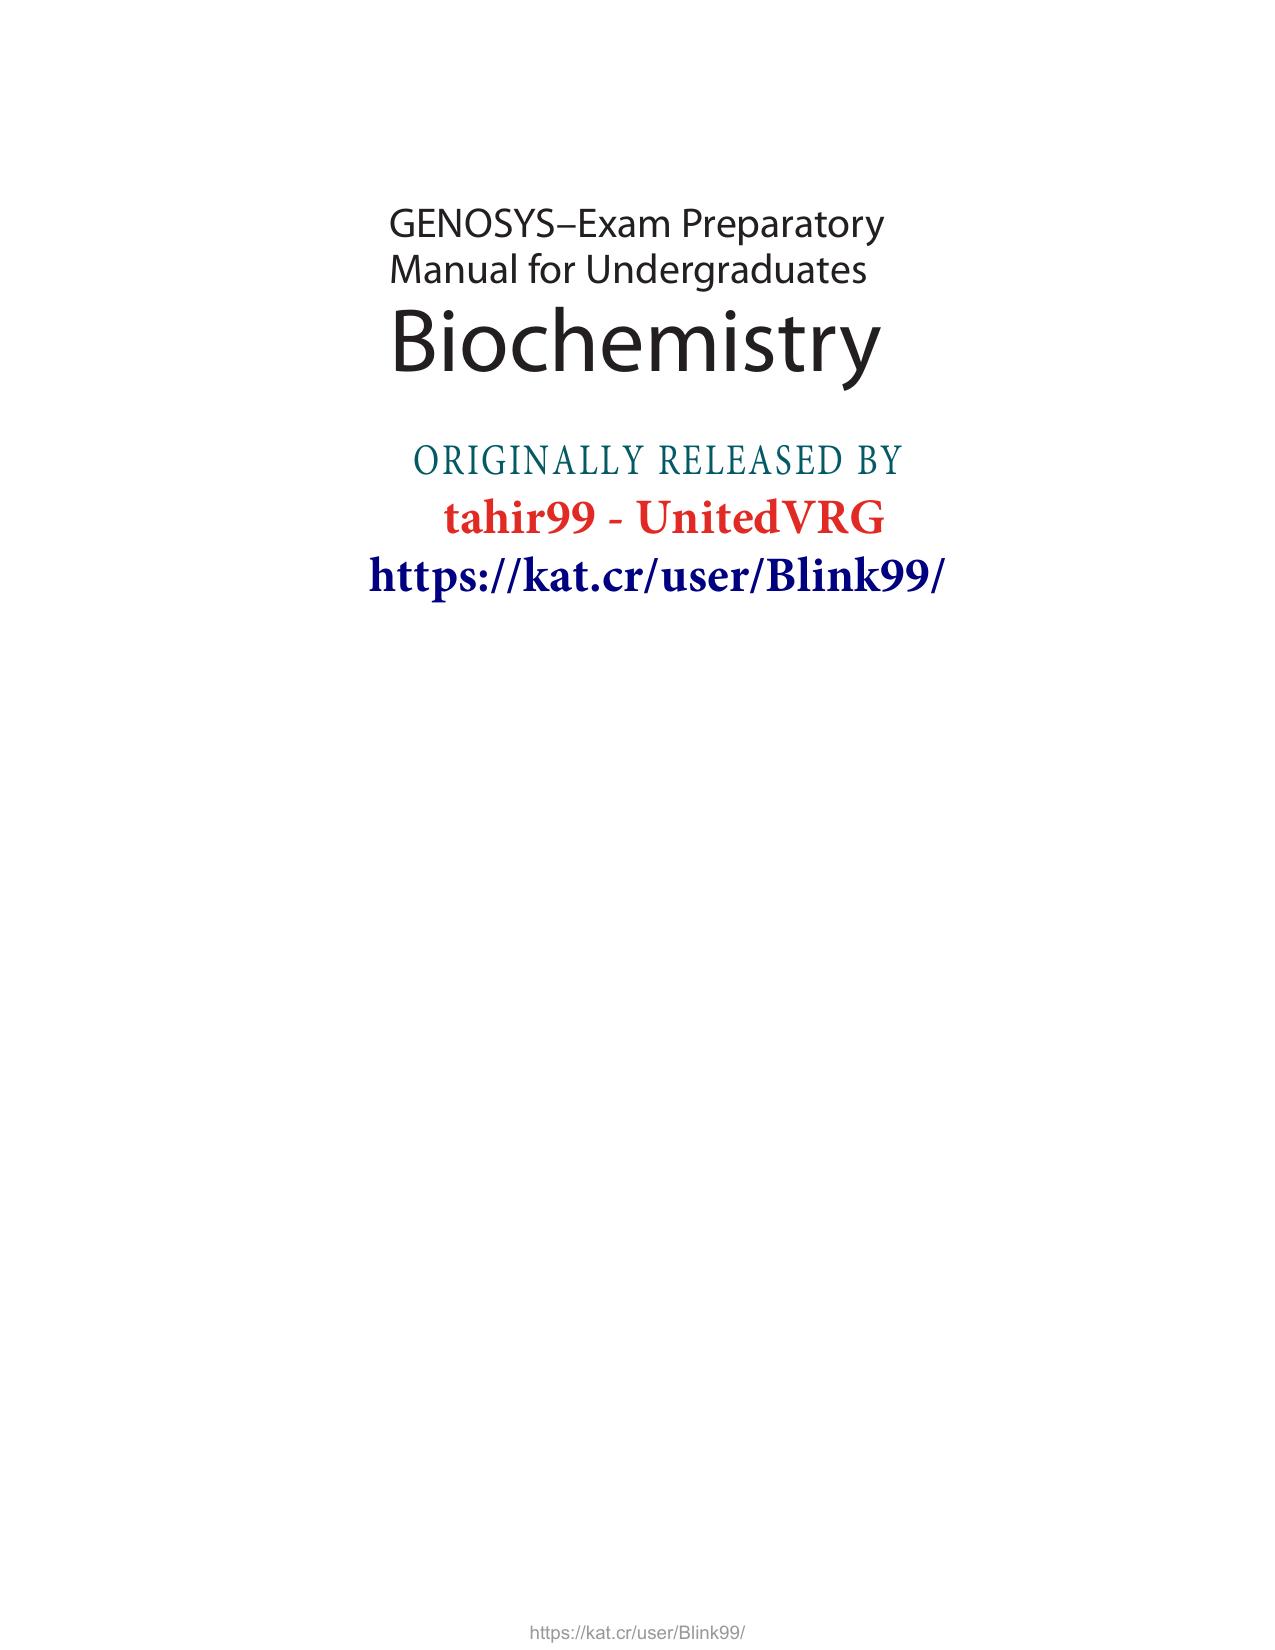 GENOSYS–Exam Preparatory Manual for Undergraduates BIOCHEMISTRY 2015